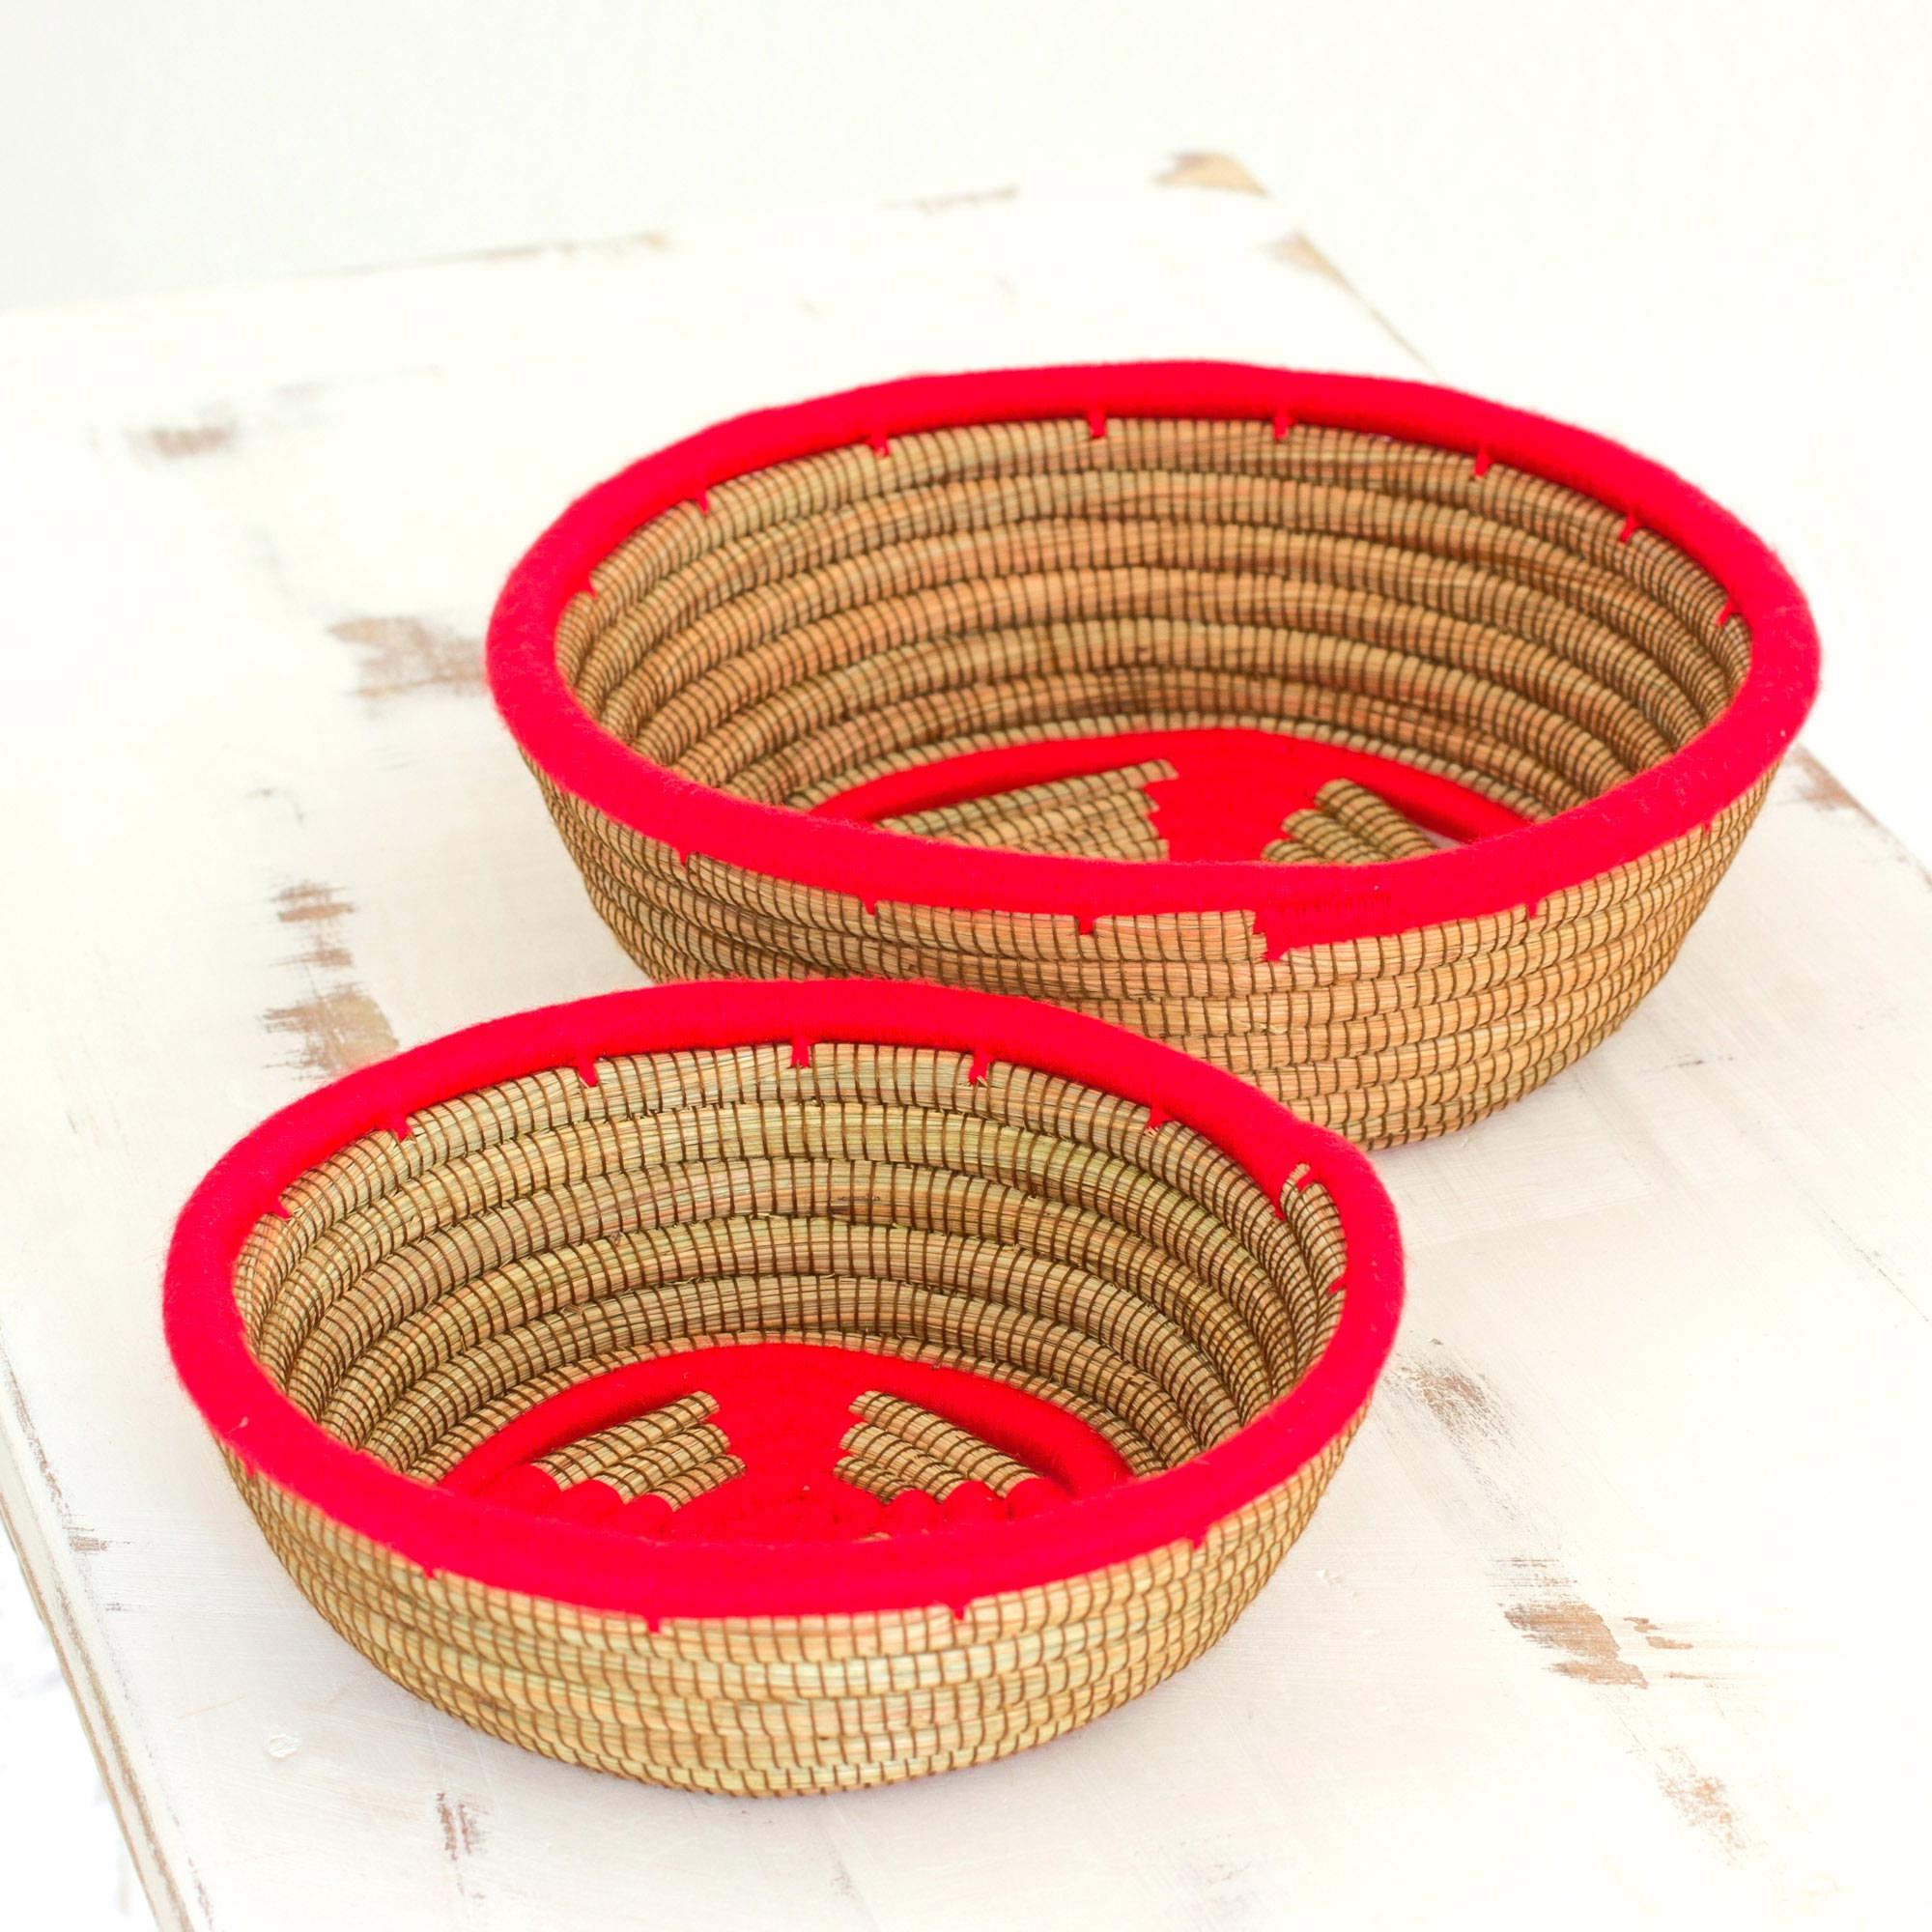 Nicaraguan Pine Needle Basket